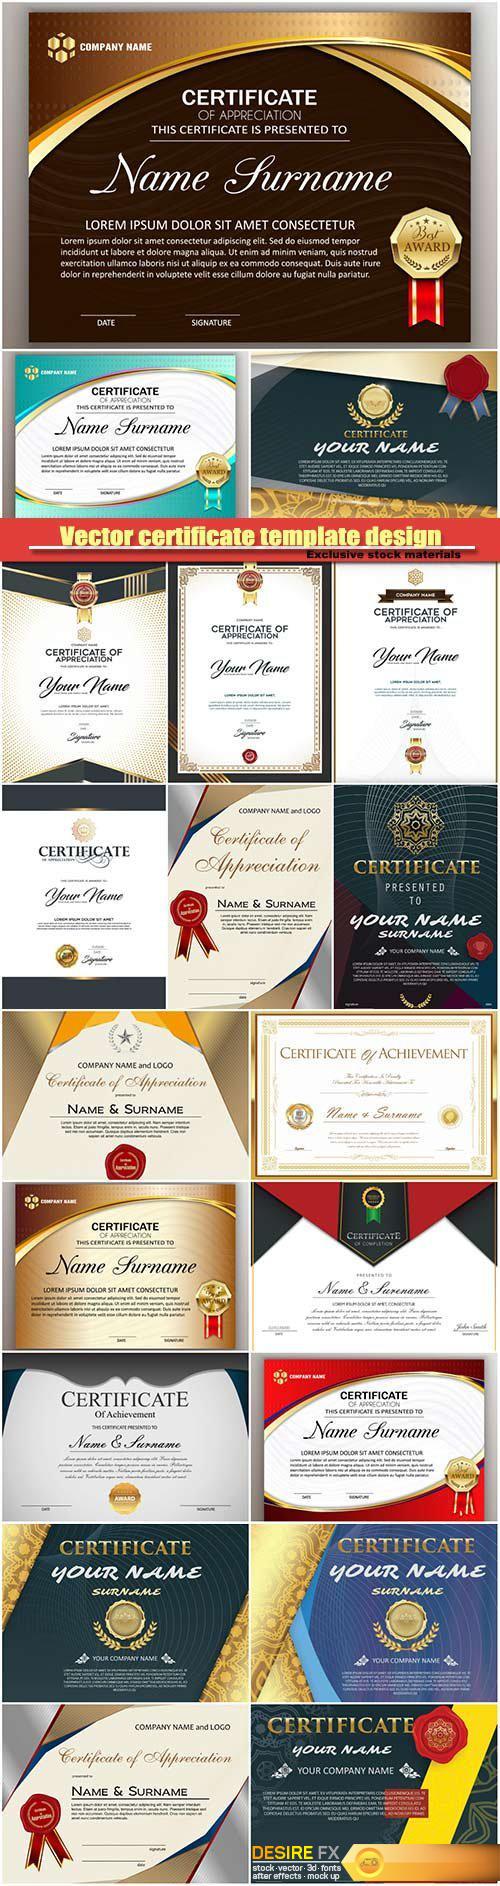 Beautiful vector certificate template design with best award symbol